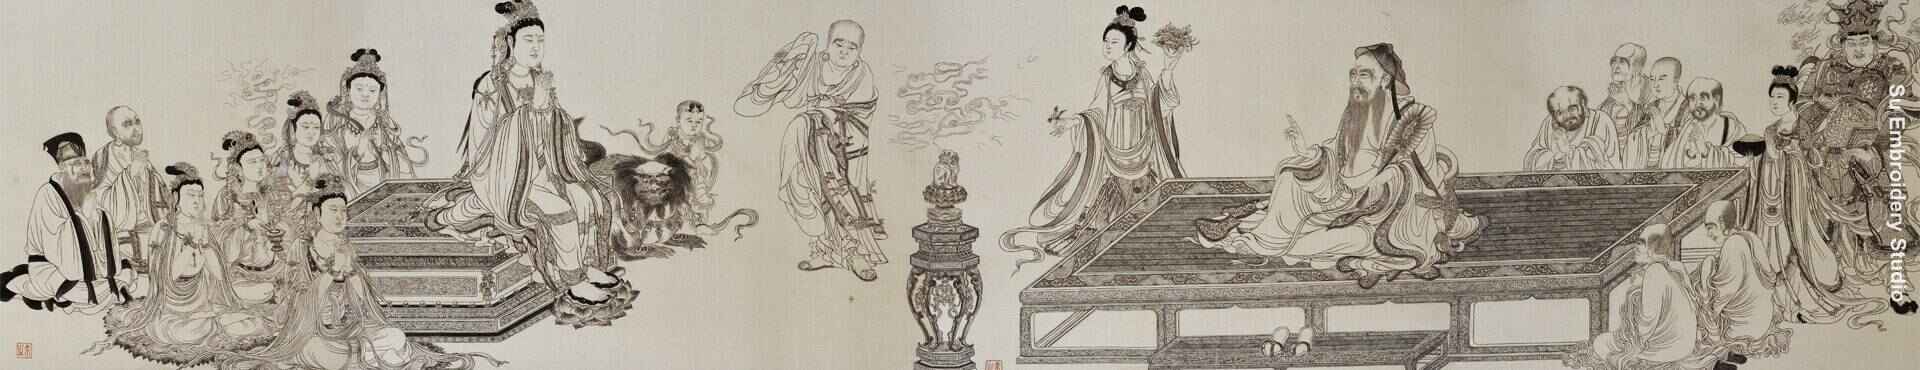 chinese silk embroidery painting vimalakirti Preaching Doctrines